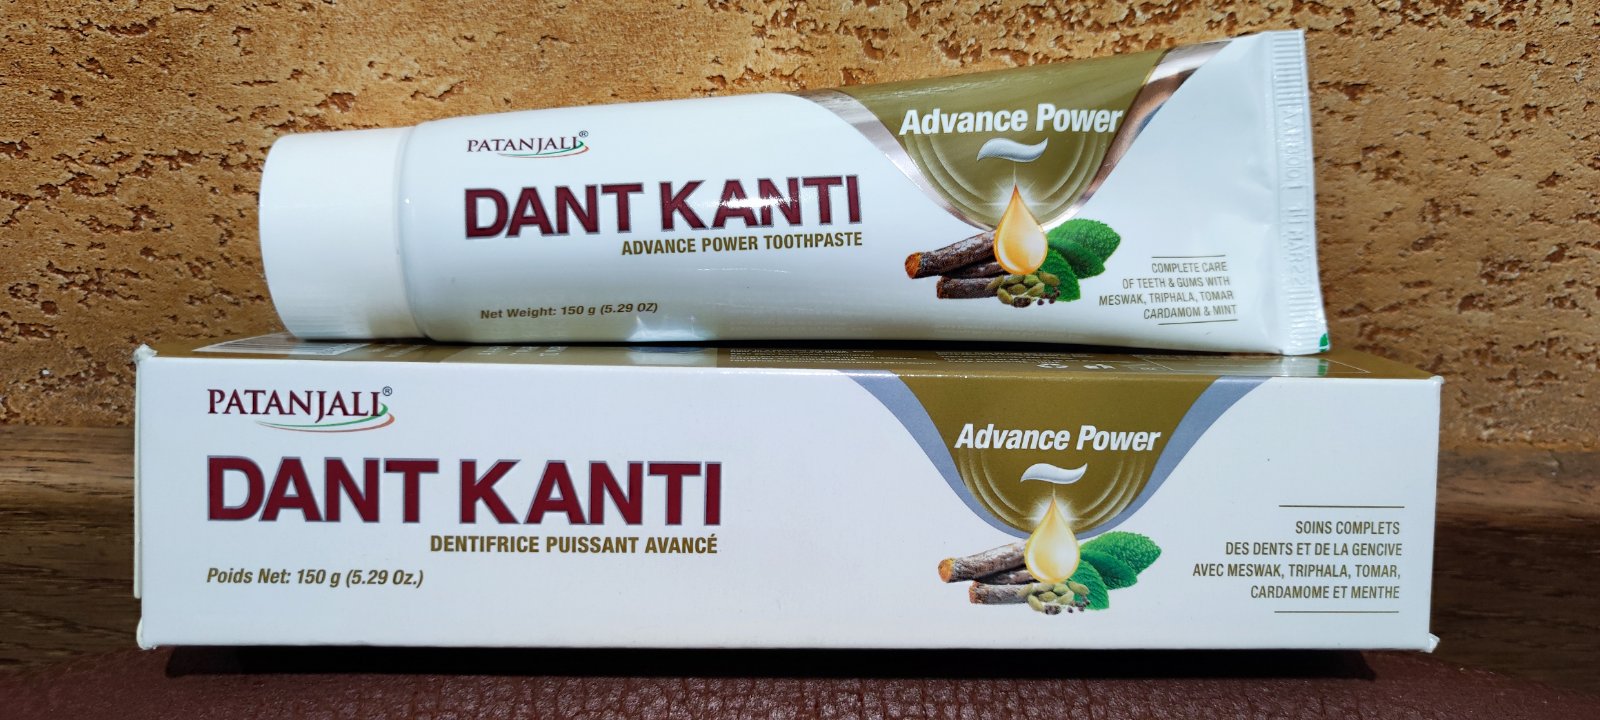 Зубная паста Дант Канти Advance power Dant Kanti Patanjali Улучшенная сила 150 гр